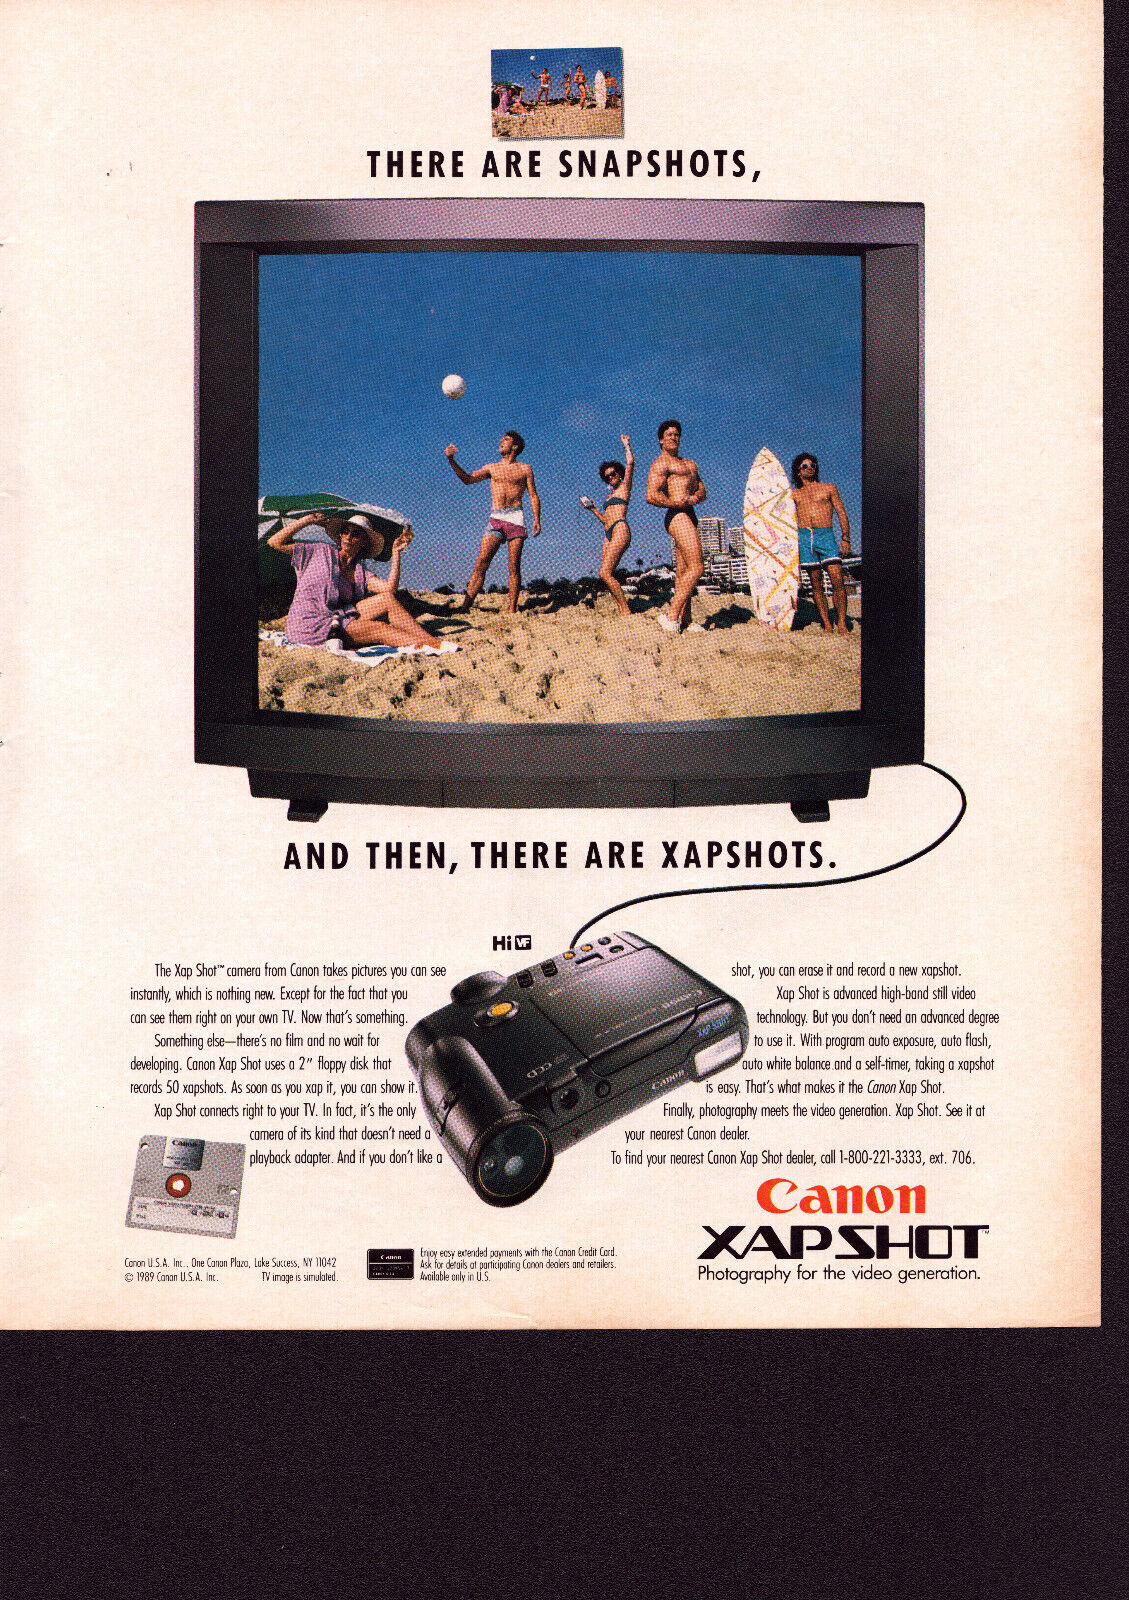 Print Ad 1989 Canon Xapshot Vintage  LIFE Magazine READ